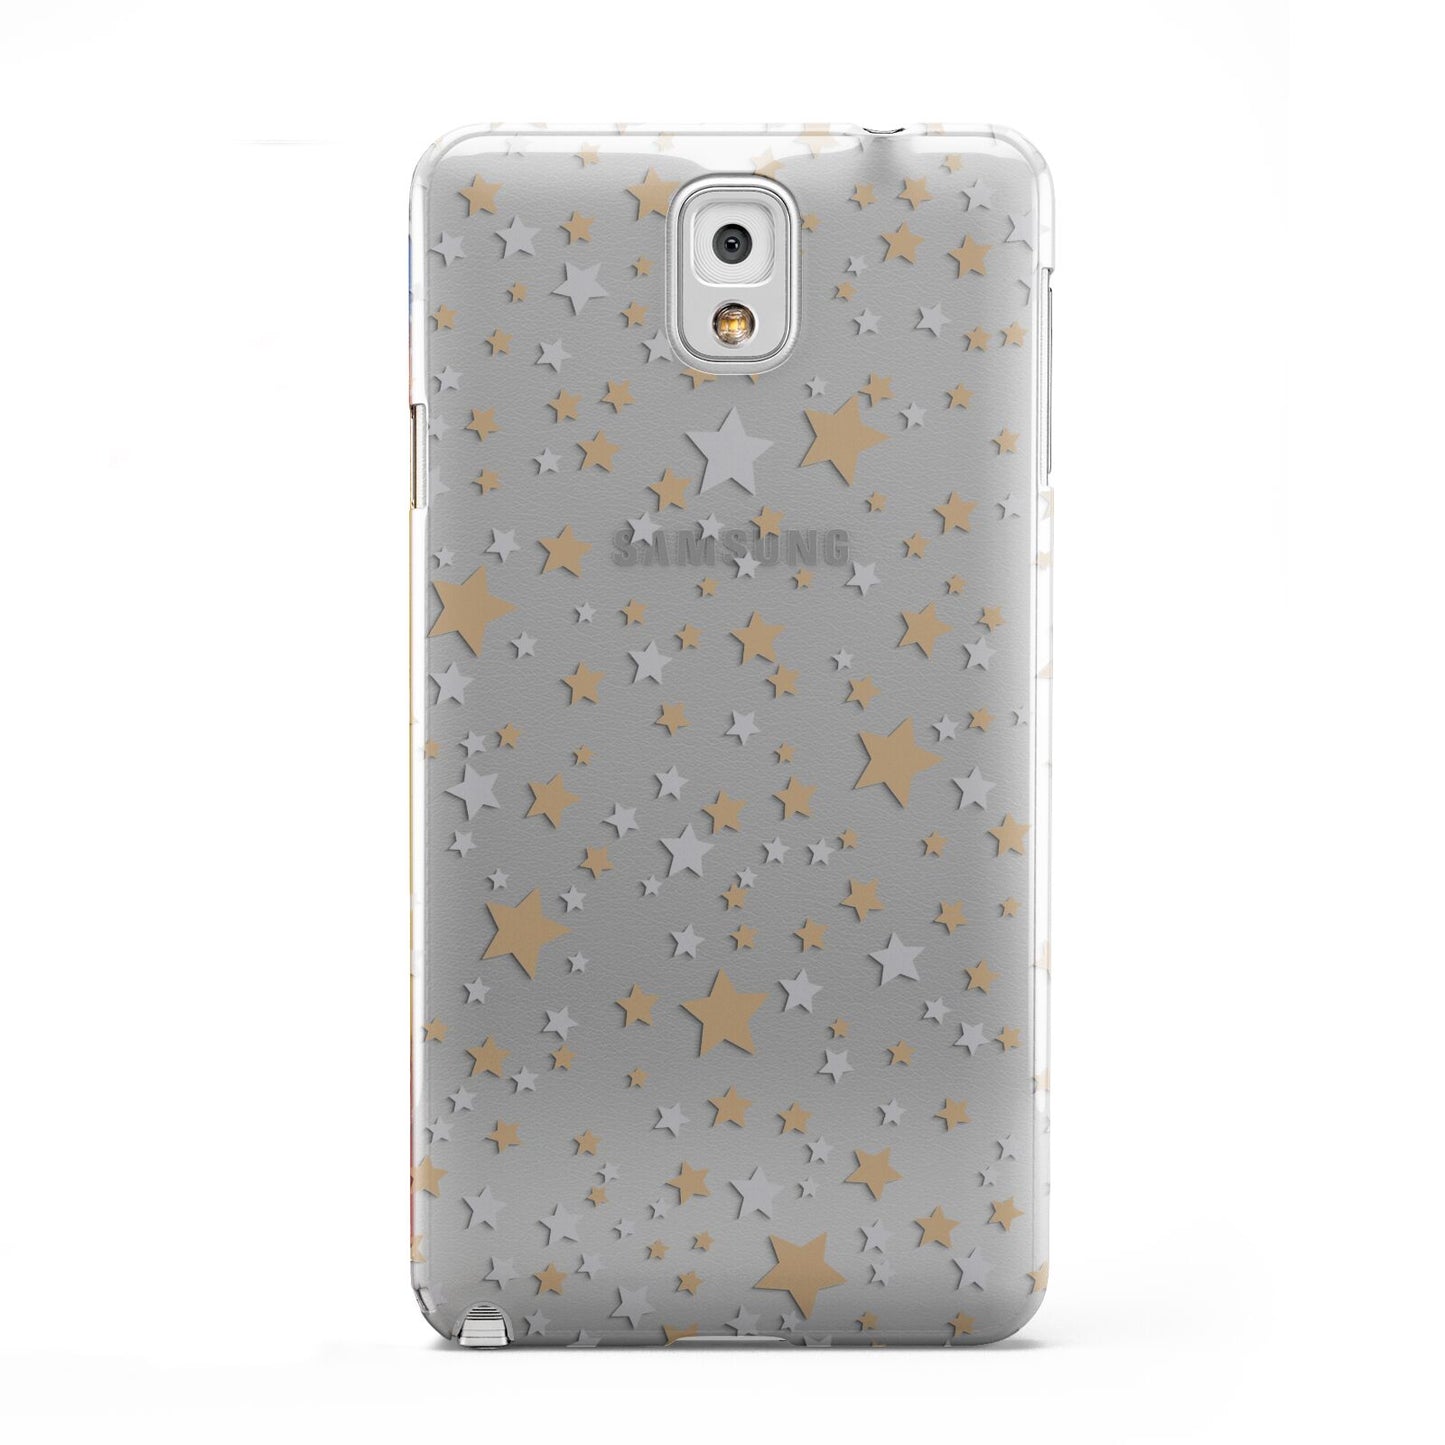 Silver Gold Stars Samsung Galaxy Note 3 Case